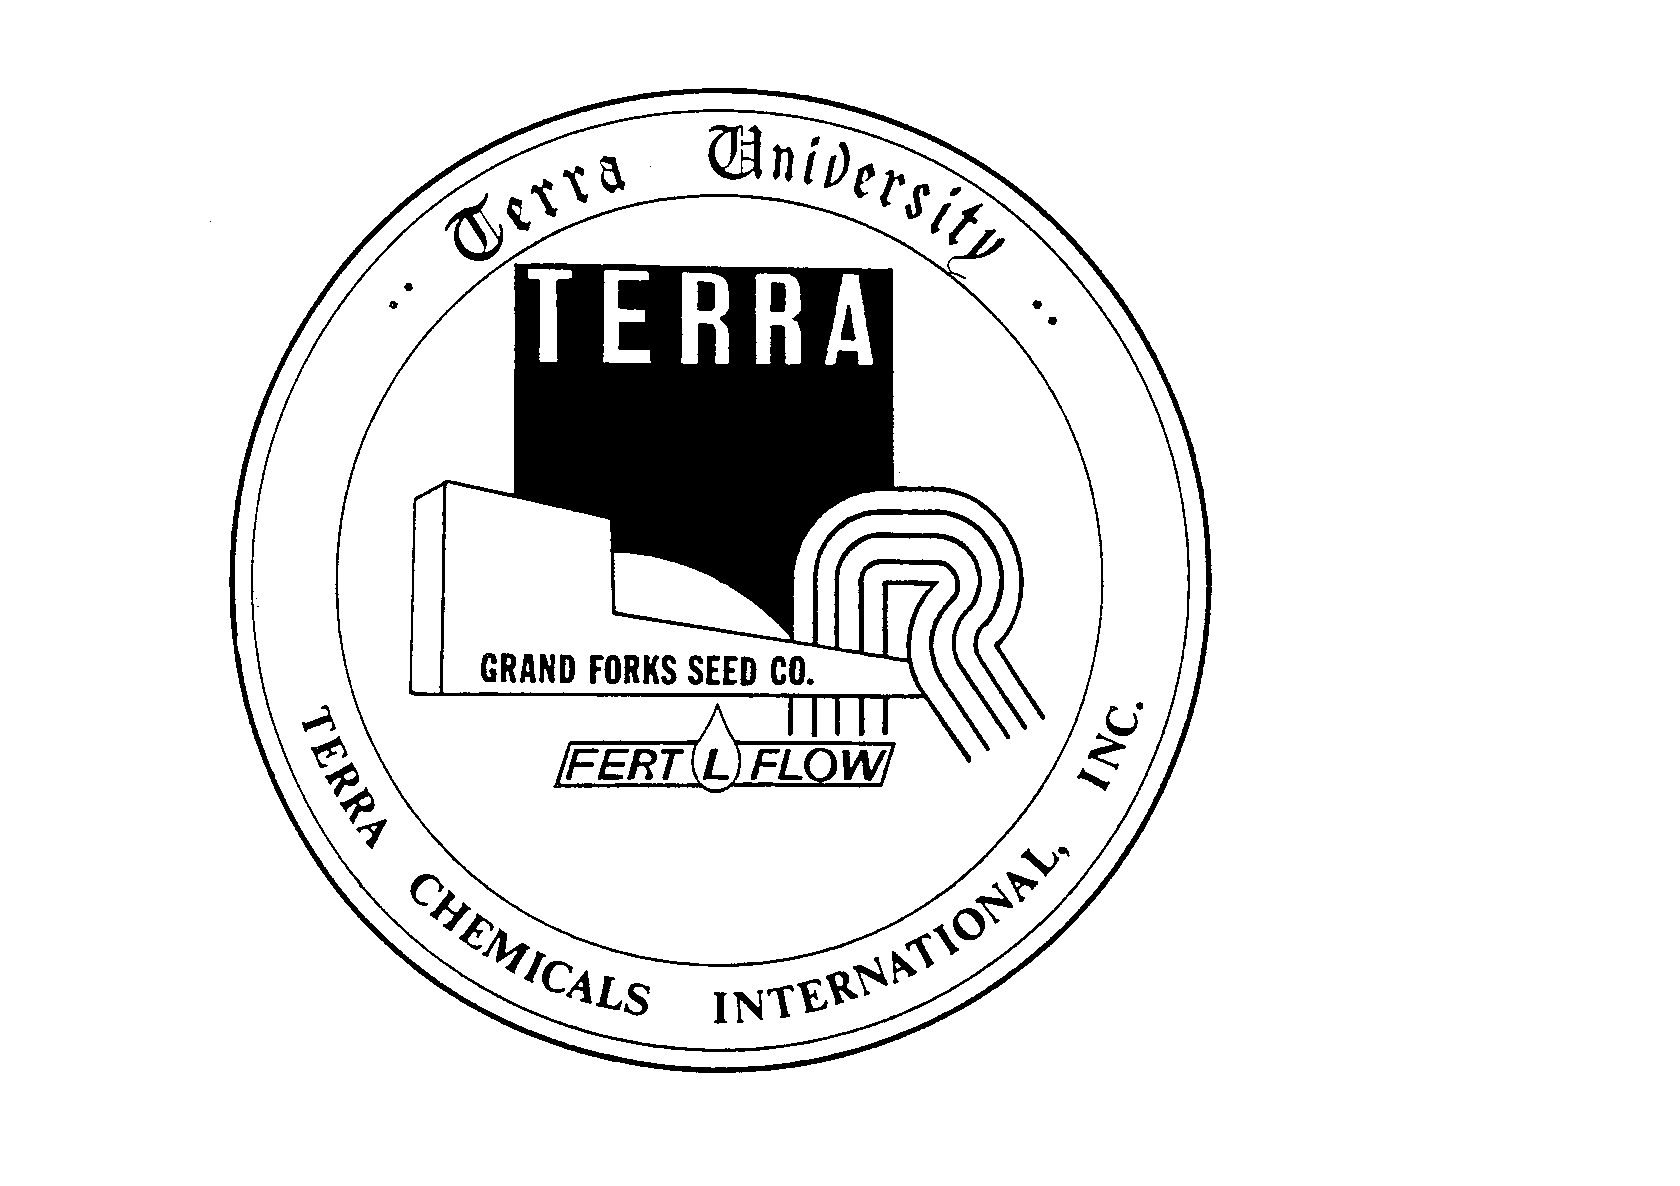  TERRA UNIVERSITY TERRA CHEMICALS INTERNATIONAL, INC. GRAND FORKS SEED CO. FERTLFLOW